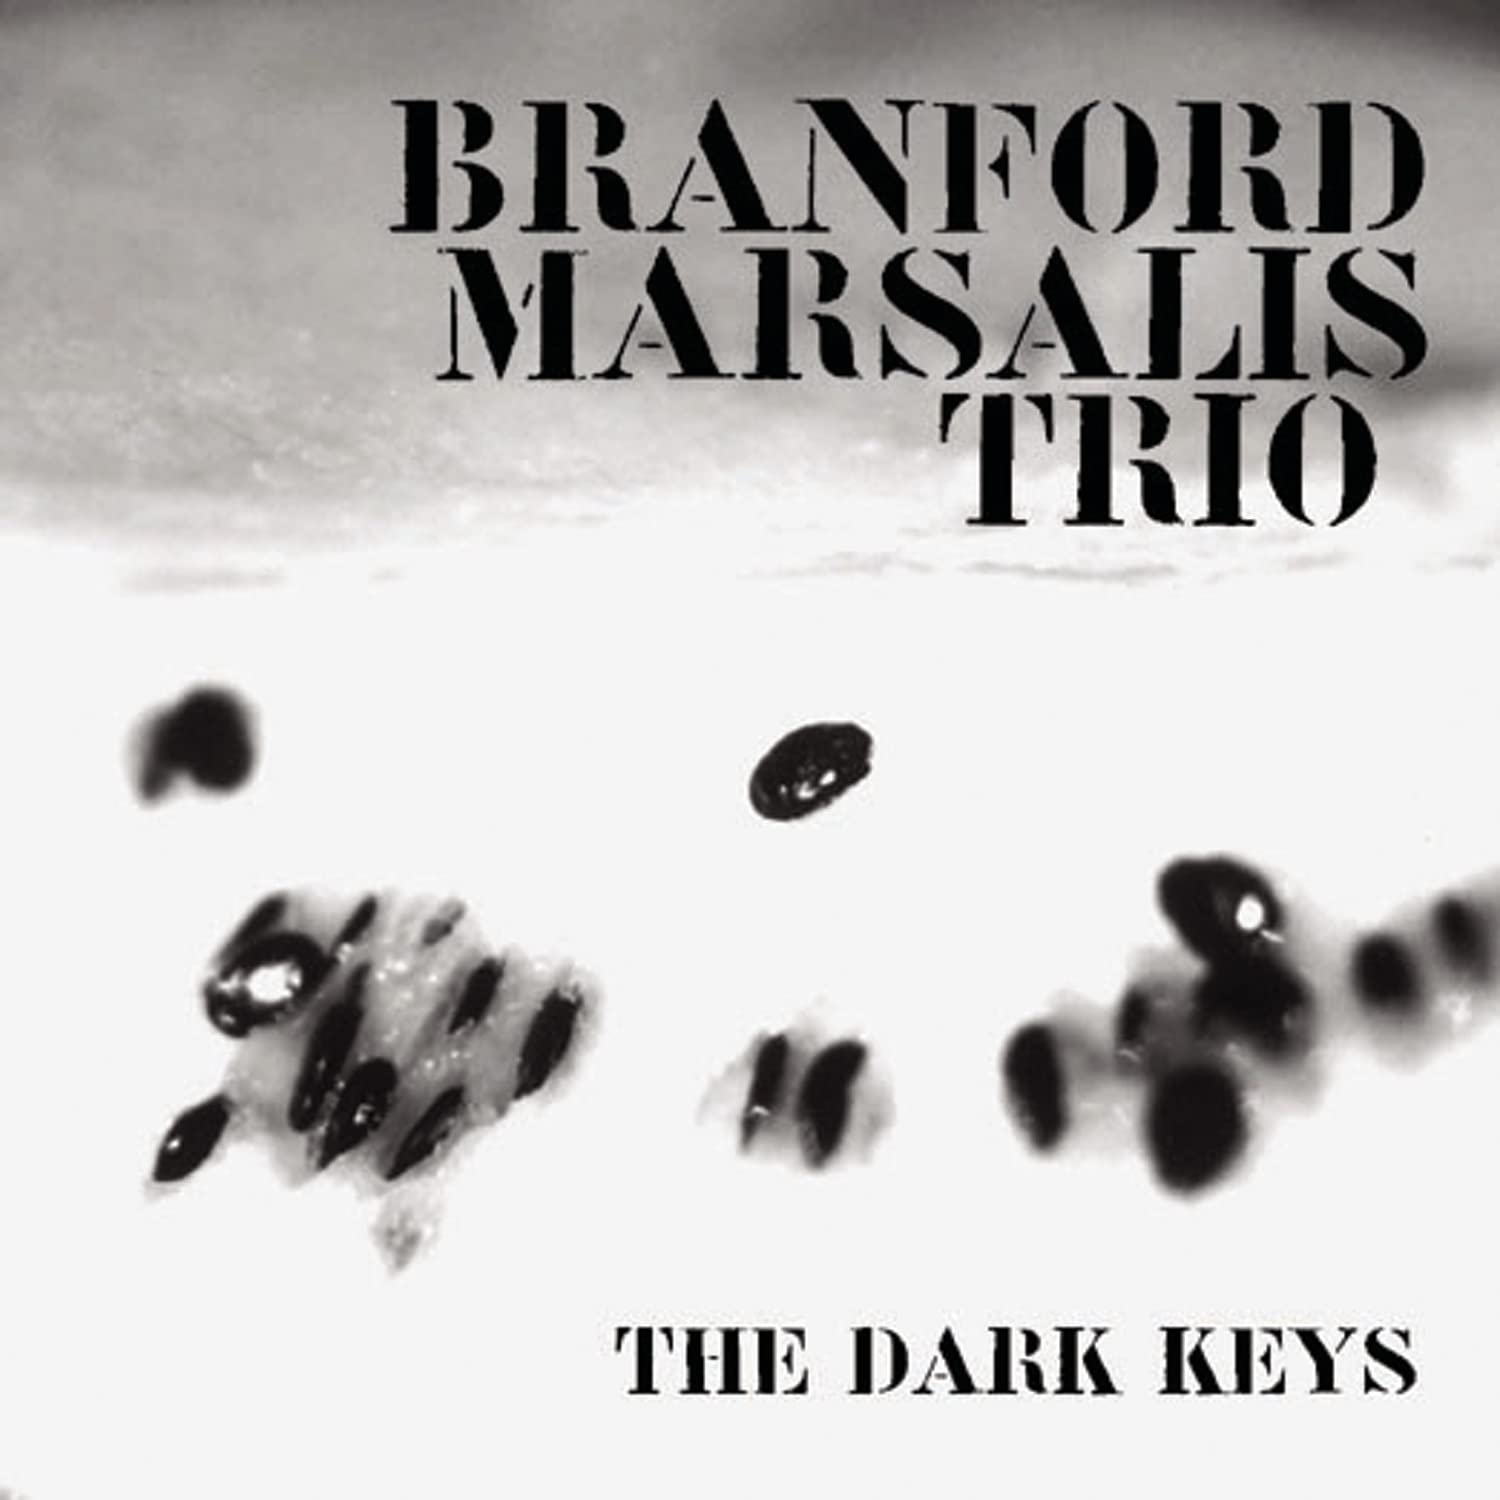 Branford Marsalis Trio- The Dark Keys - Darkside Records